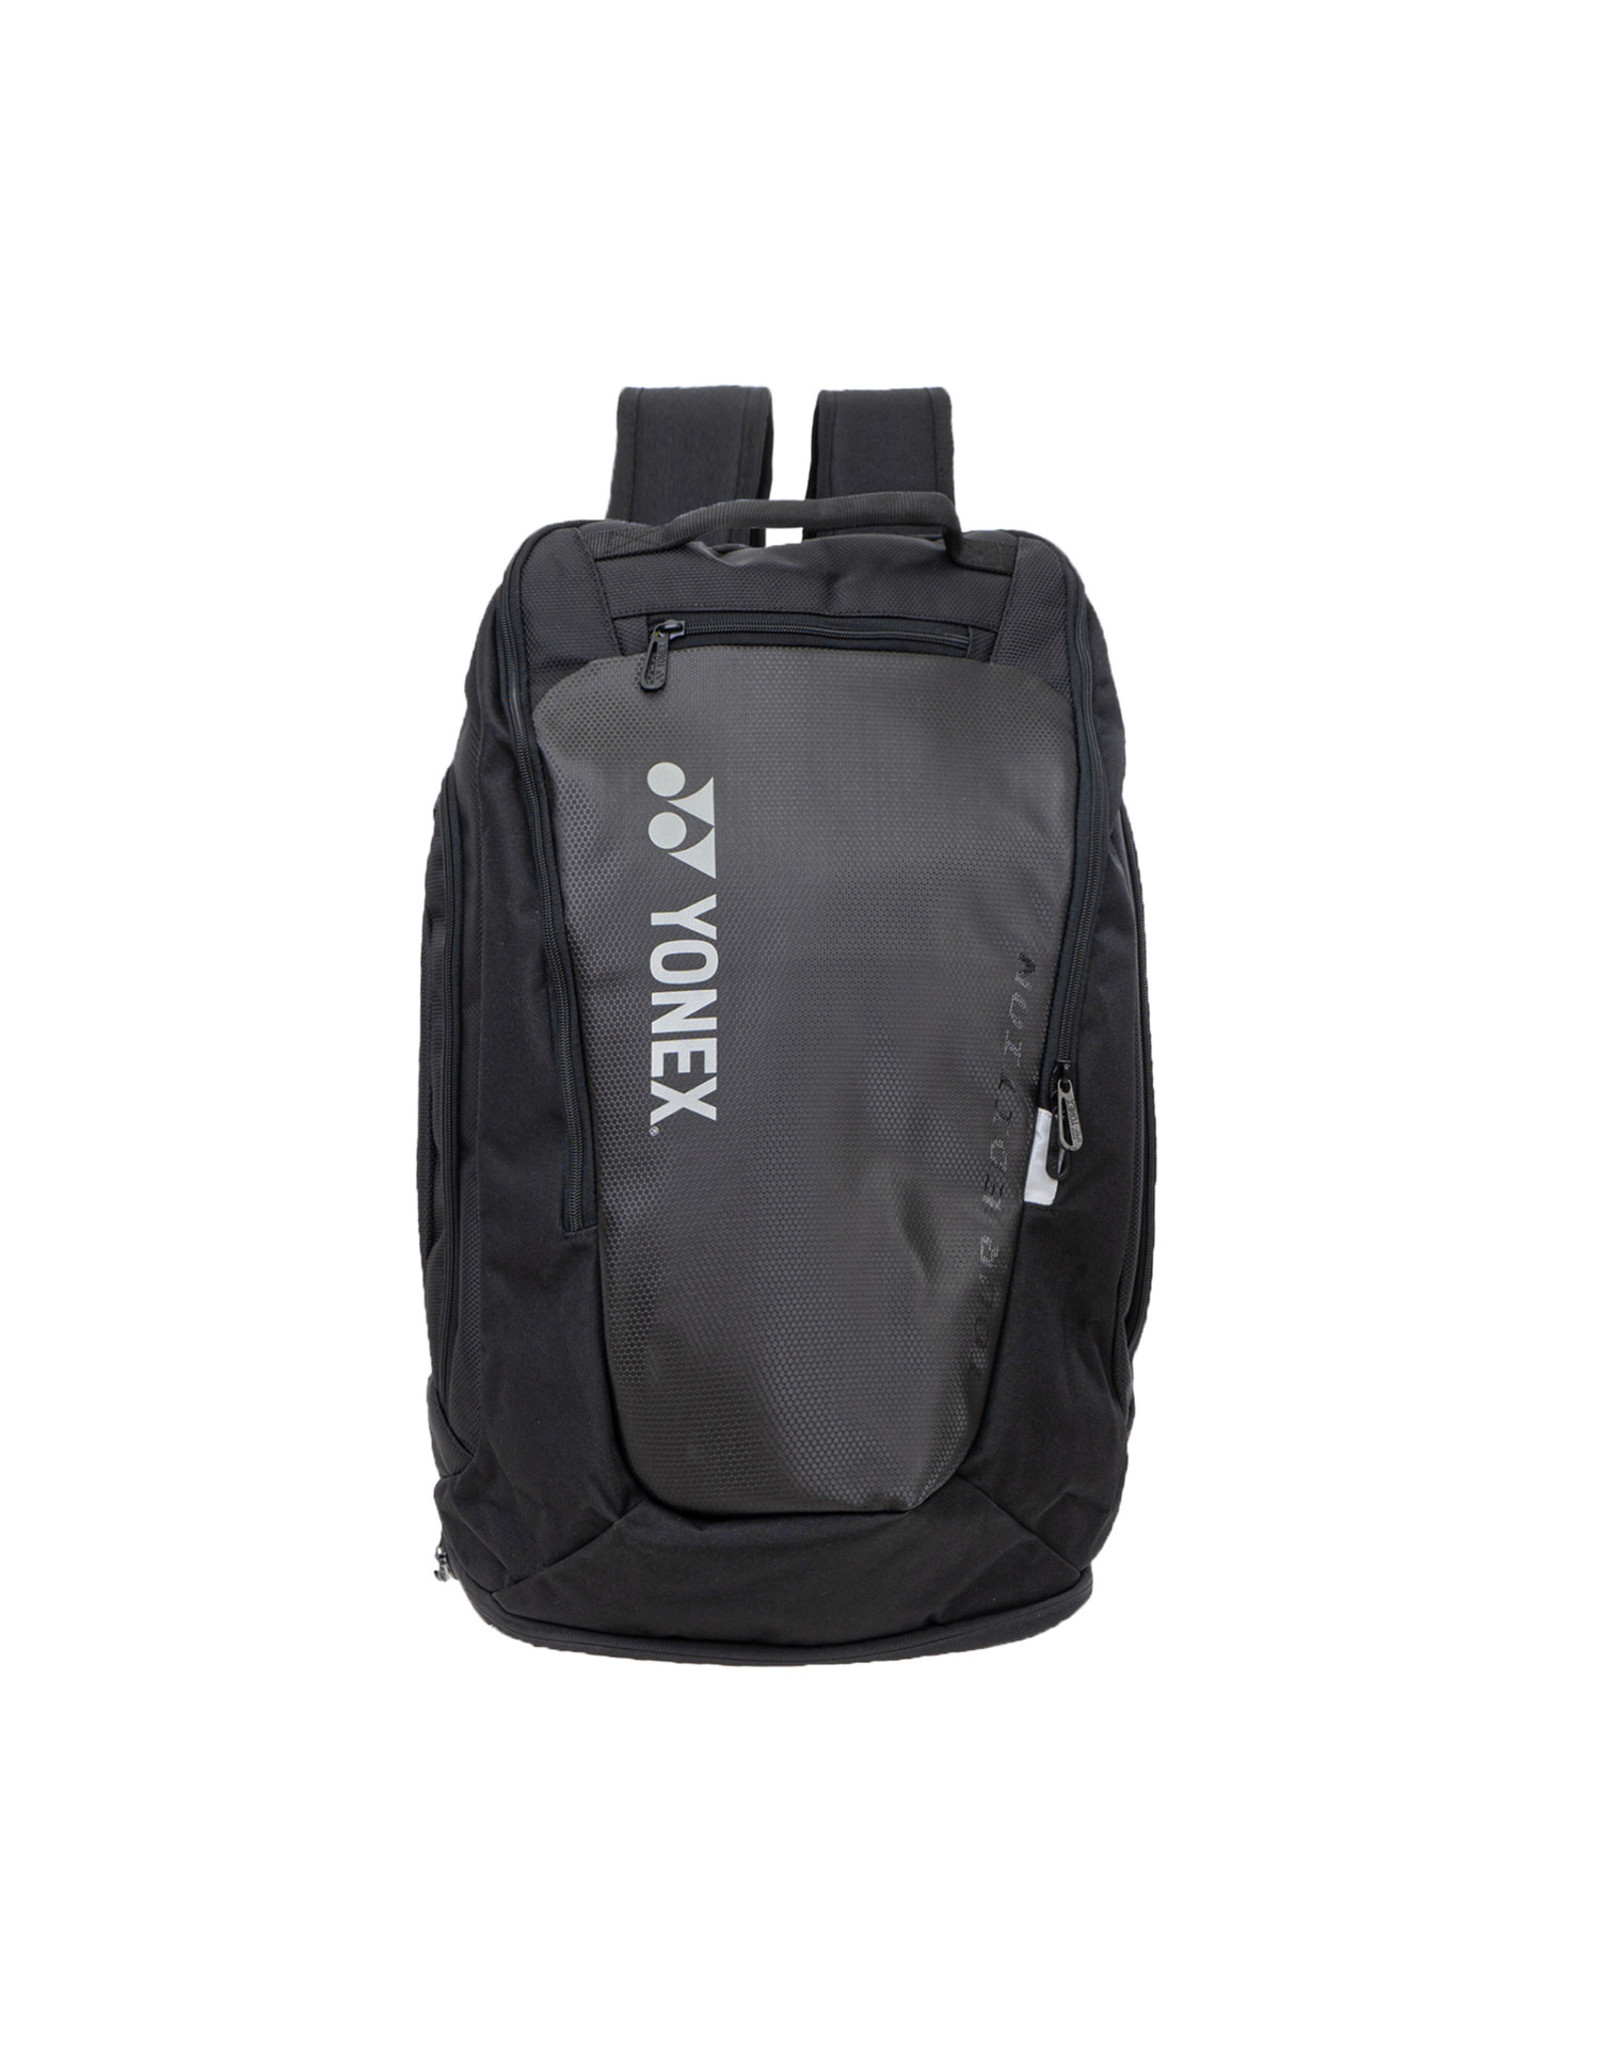 Yonex Pro Backpack